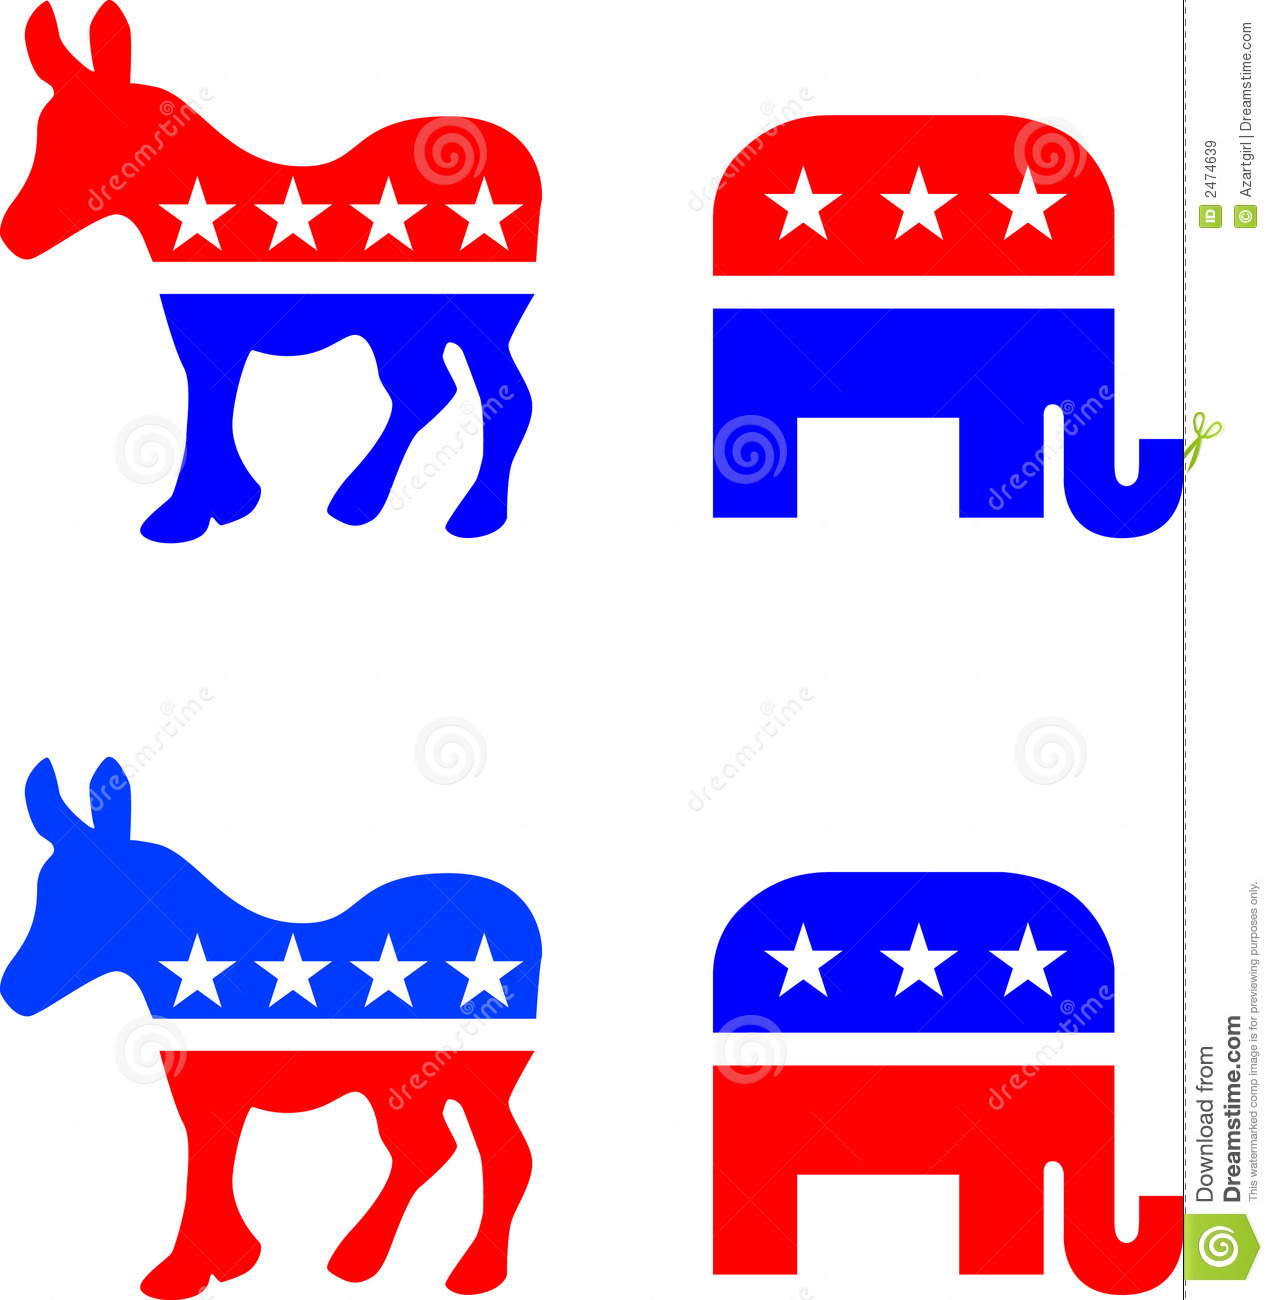 American Political Symbols Editorial Stock Image   Image  2474639